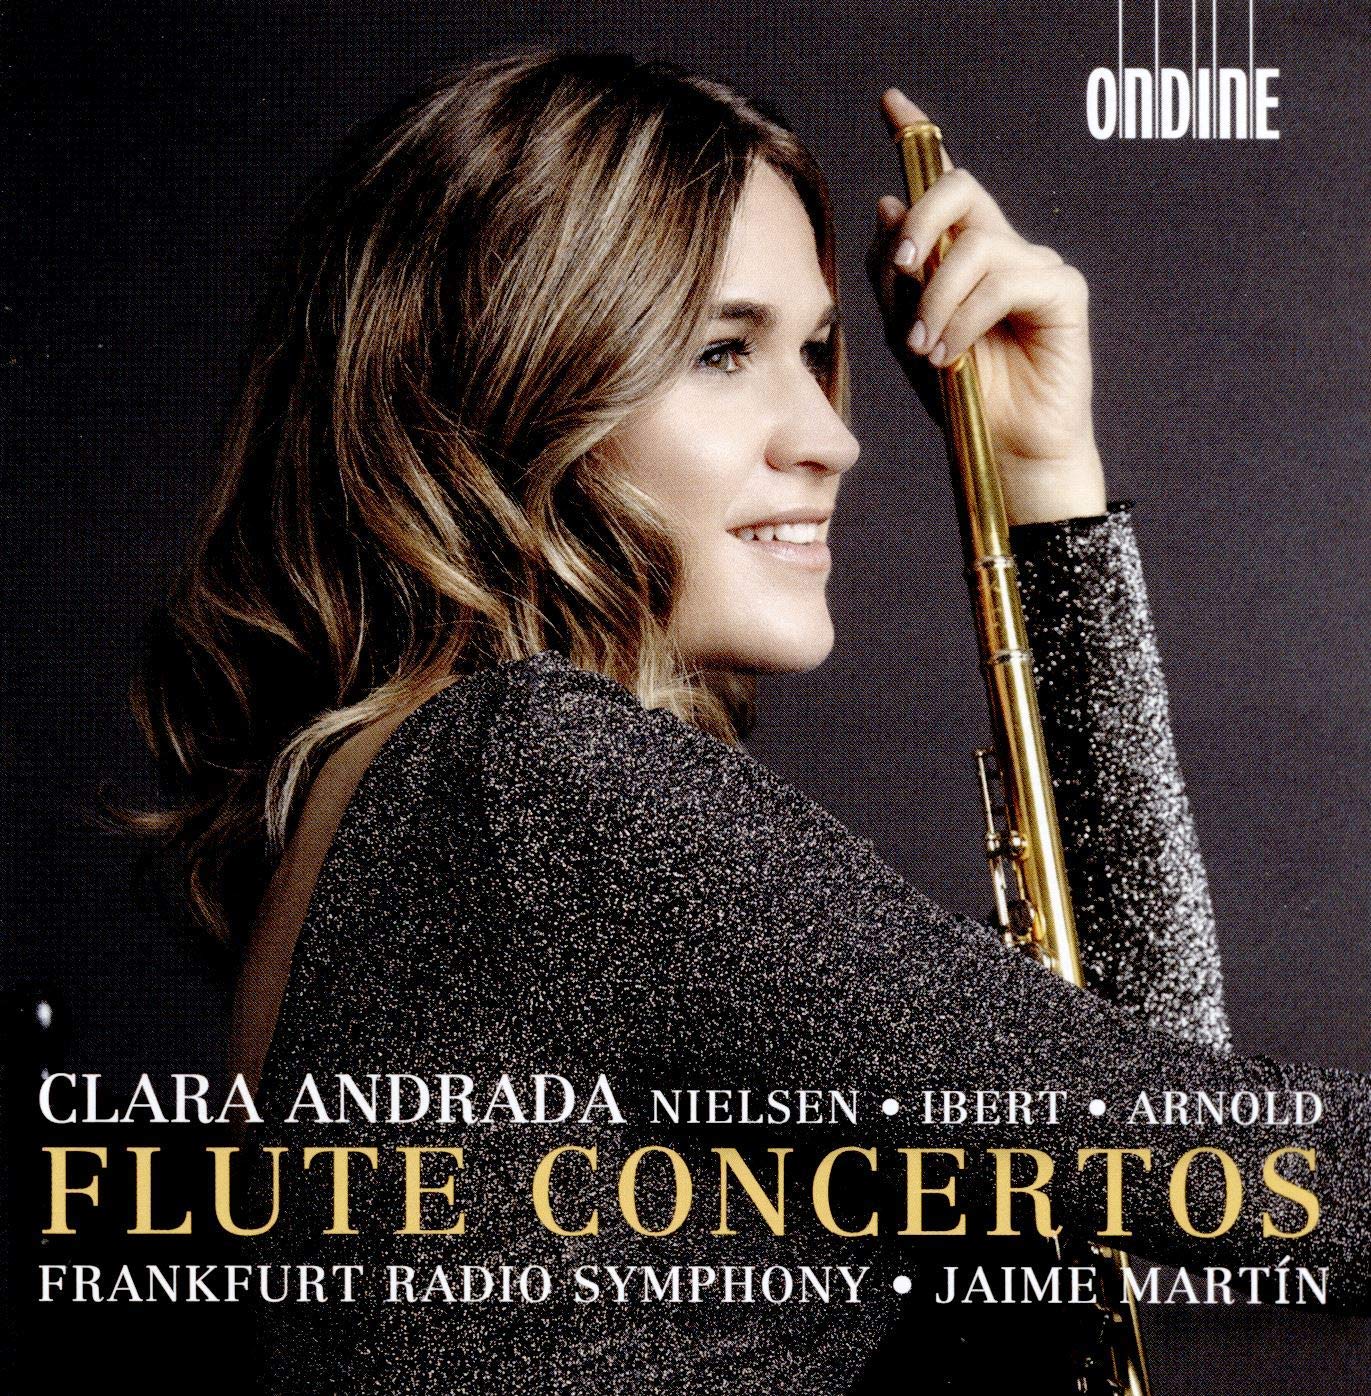 ODE13402. ARNOLD; IBERT; NIELSEN Flute Concertos (Clara Andrada)